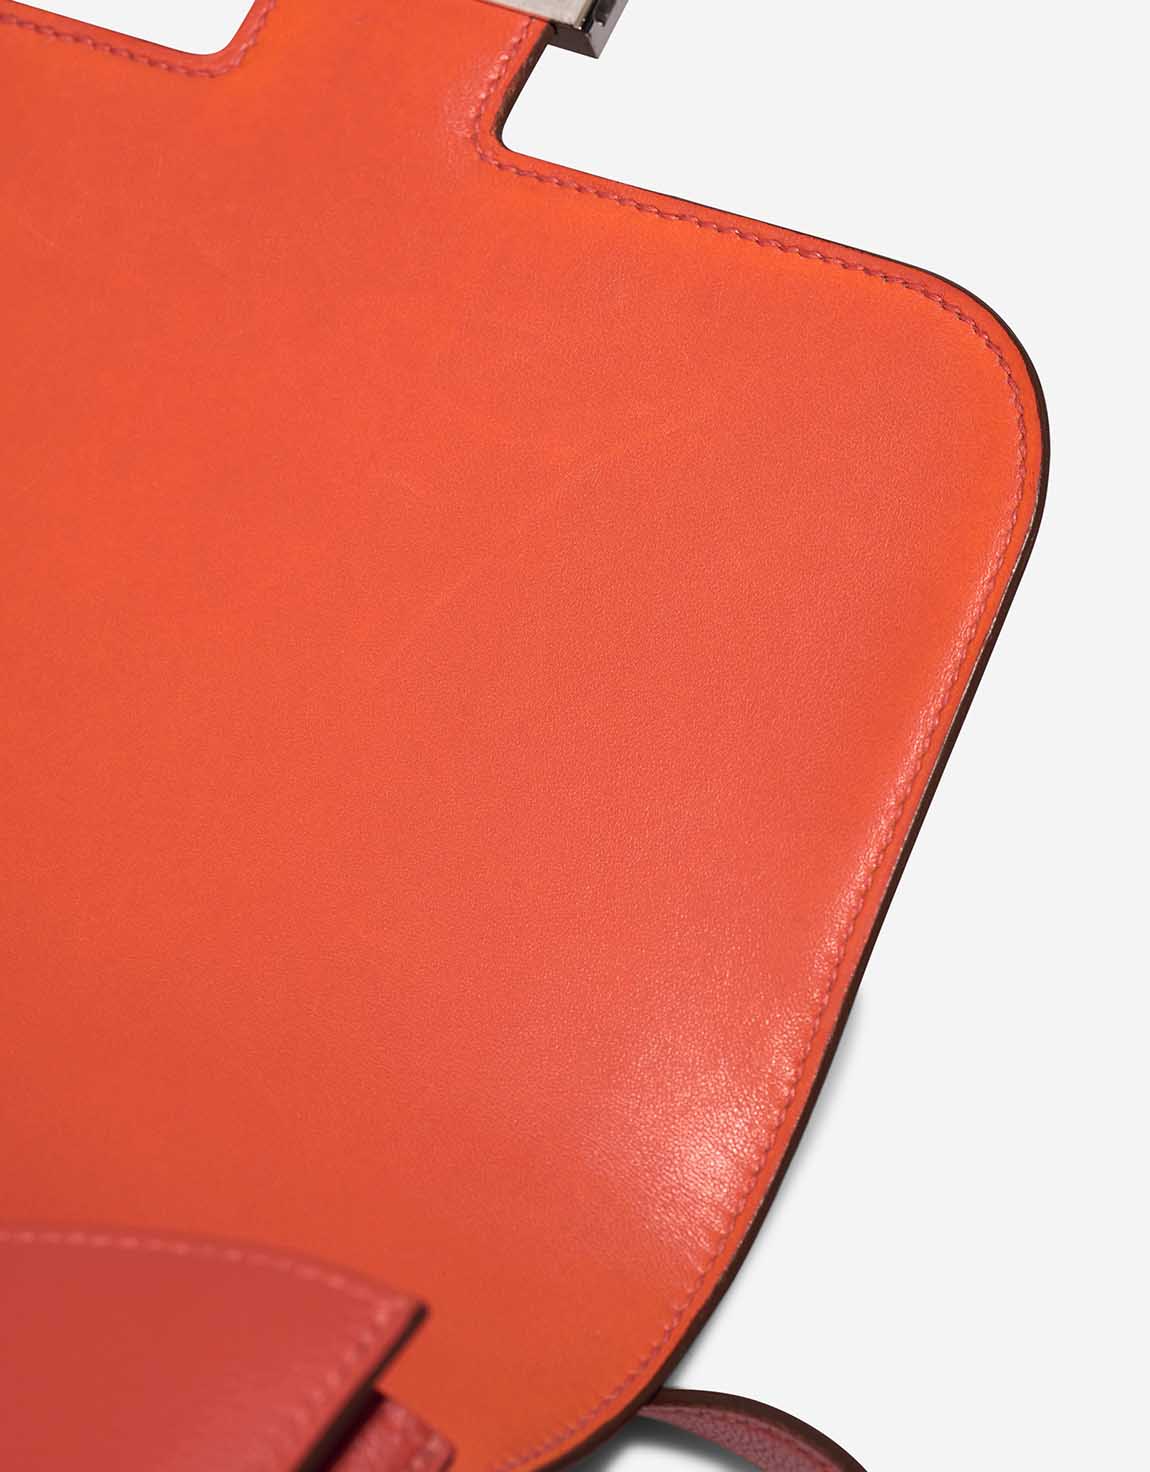 Hermès Constance 24 OrangePoppy signs of wear | Sell your designer bag on Saclab.com